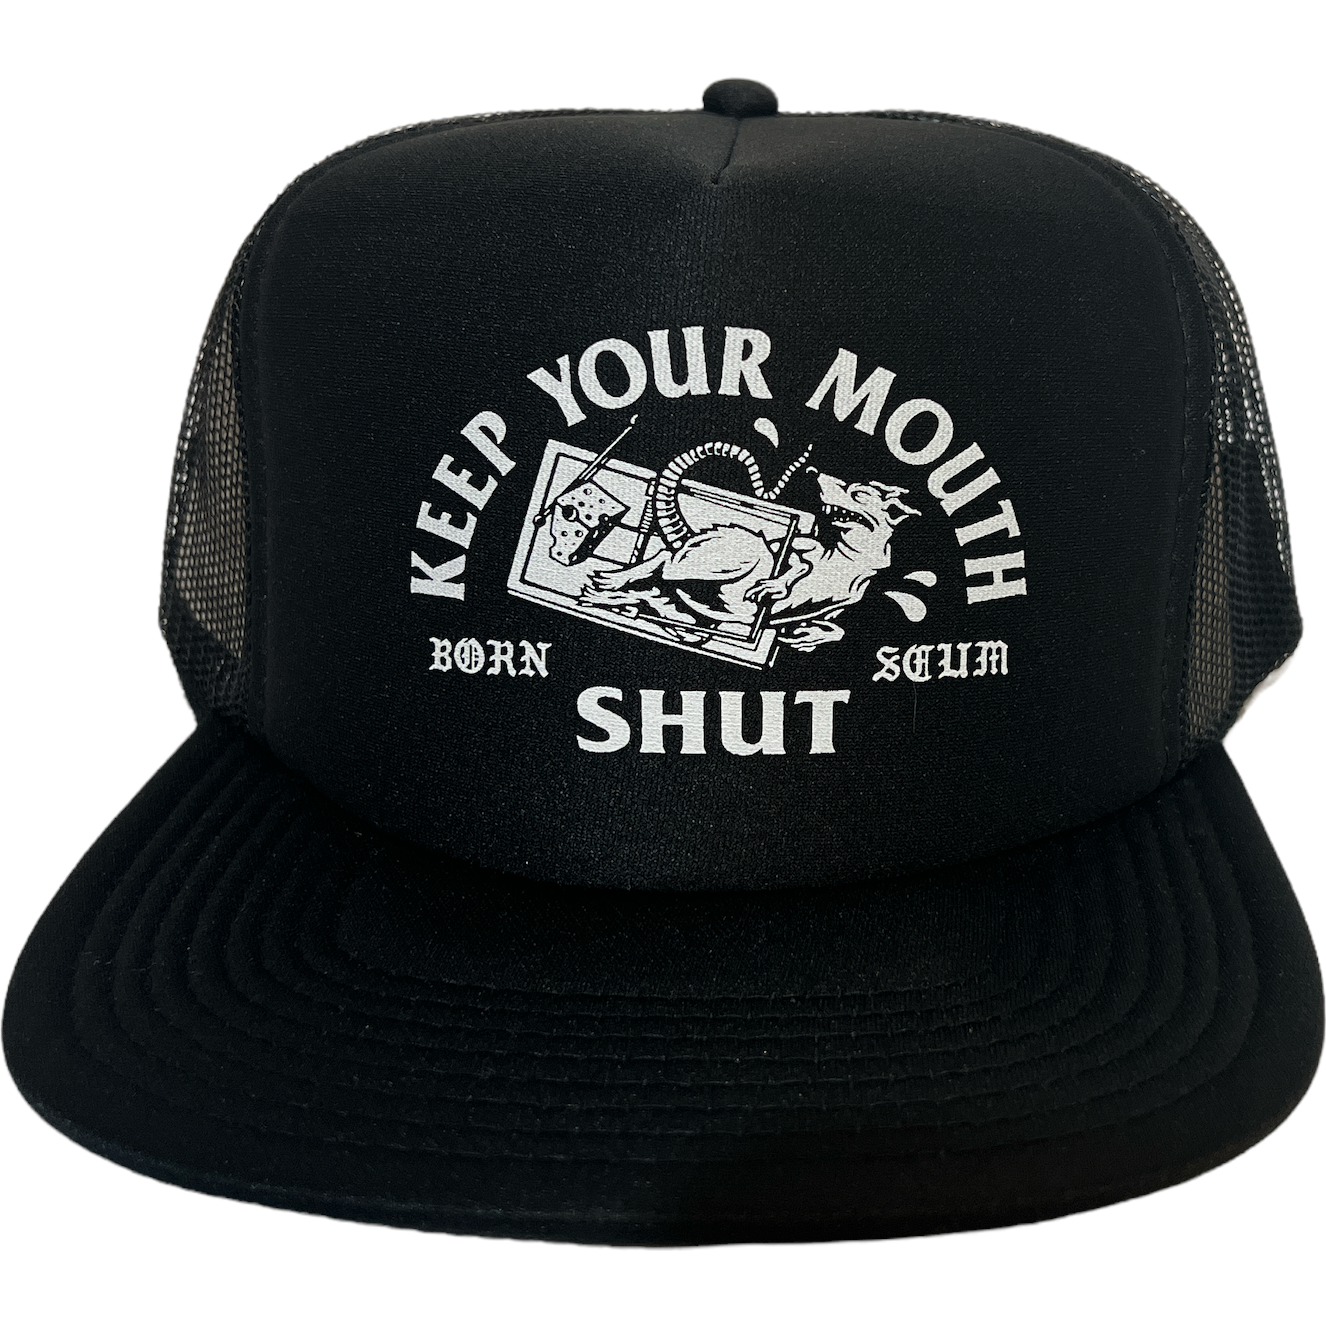 KEEP YOUR MOUTH SHUT TRUCKER HAT